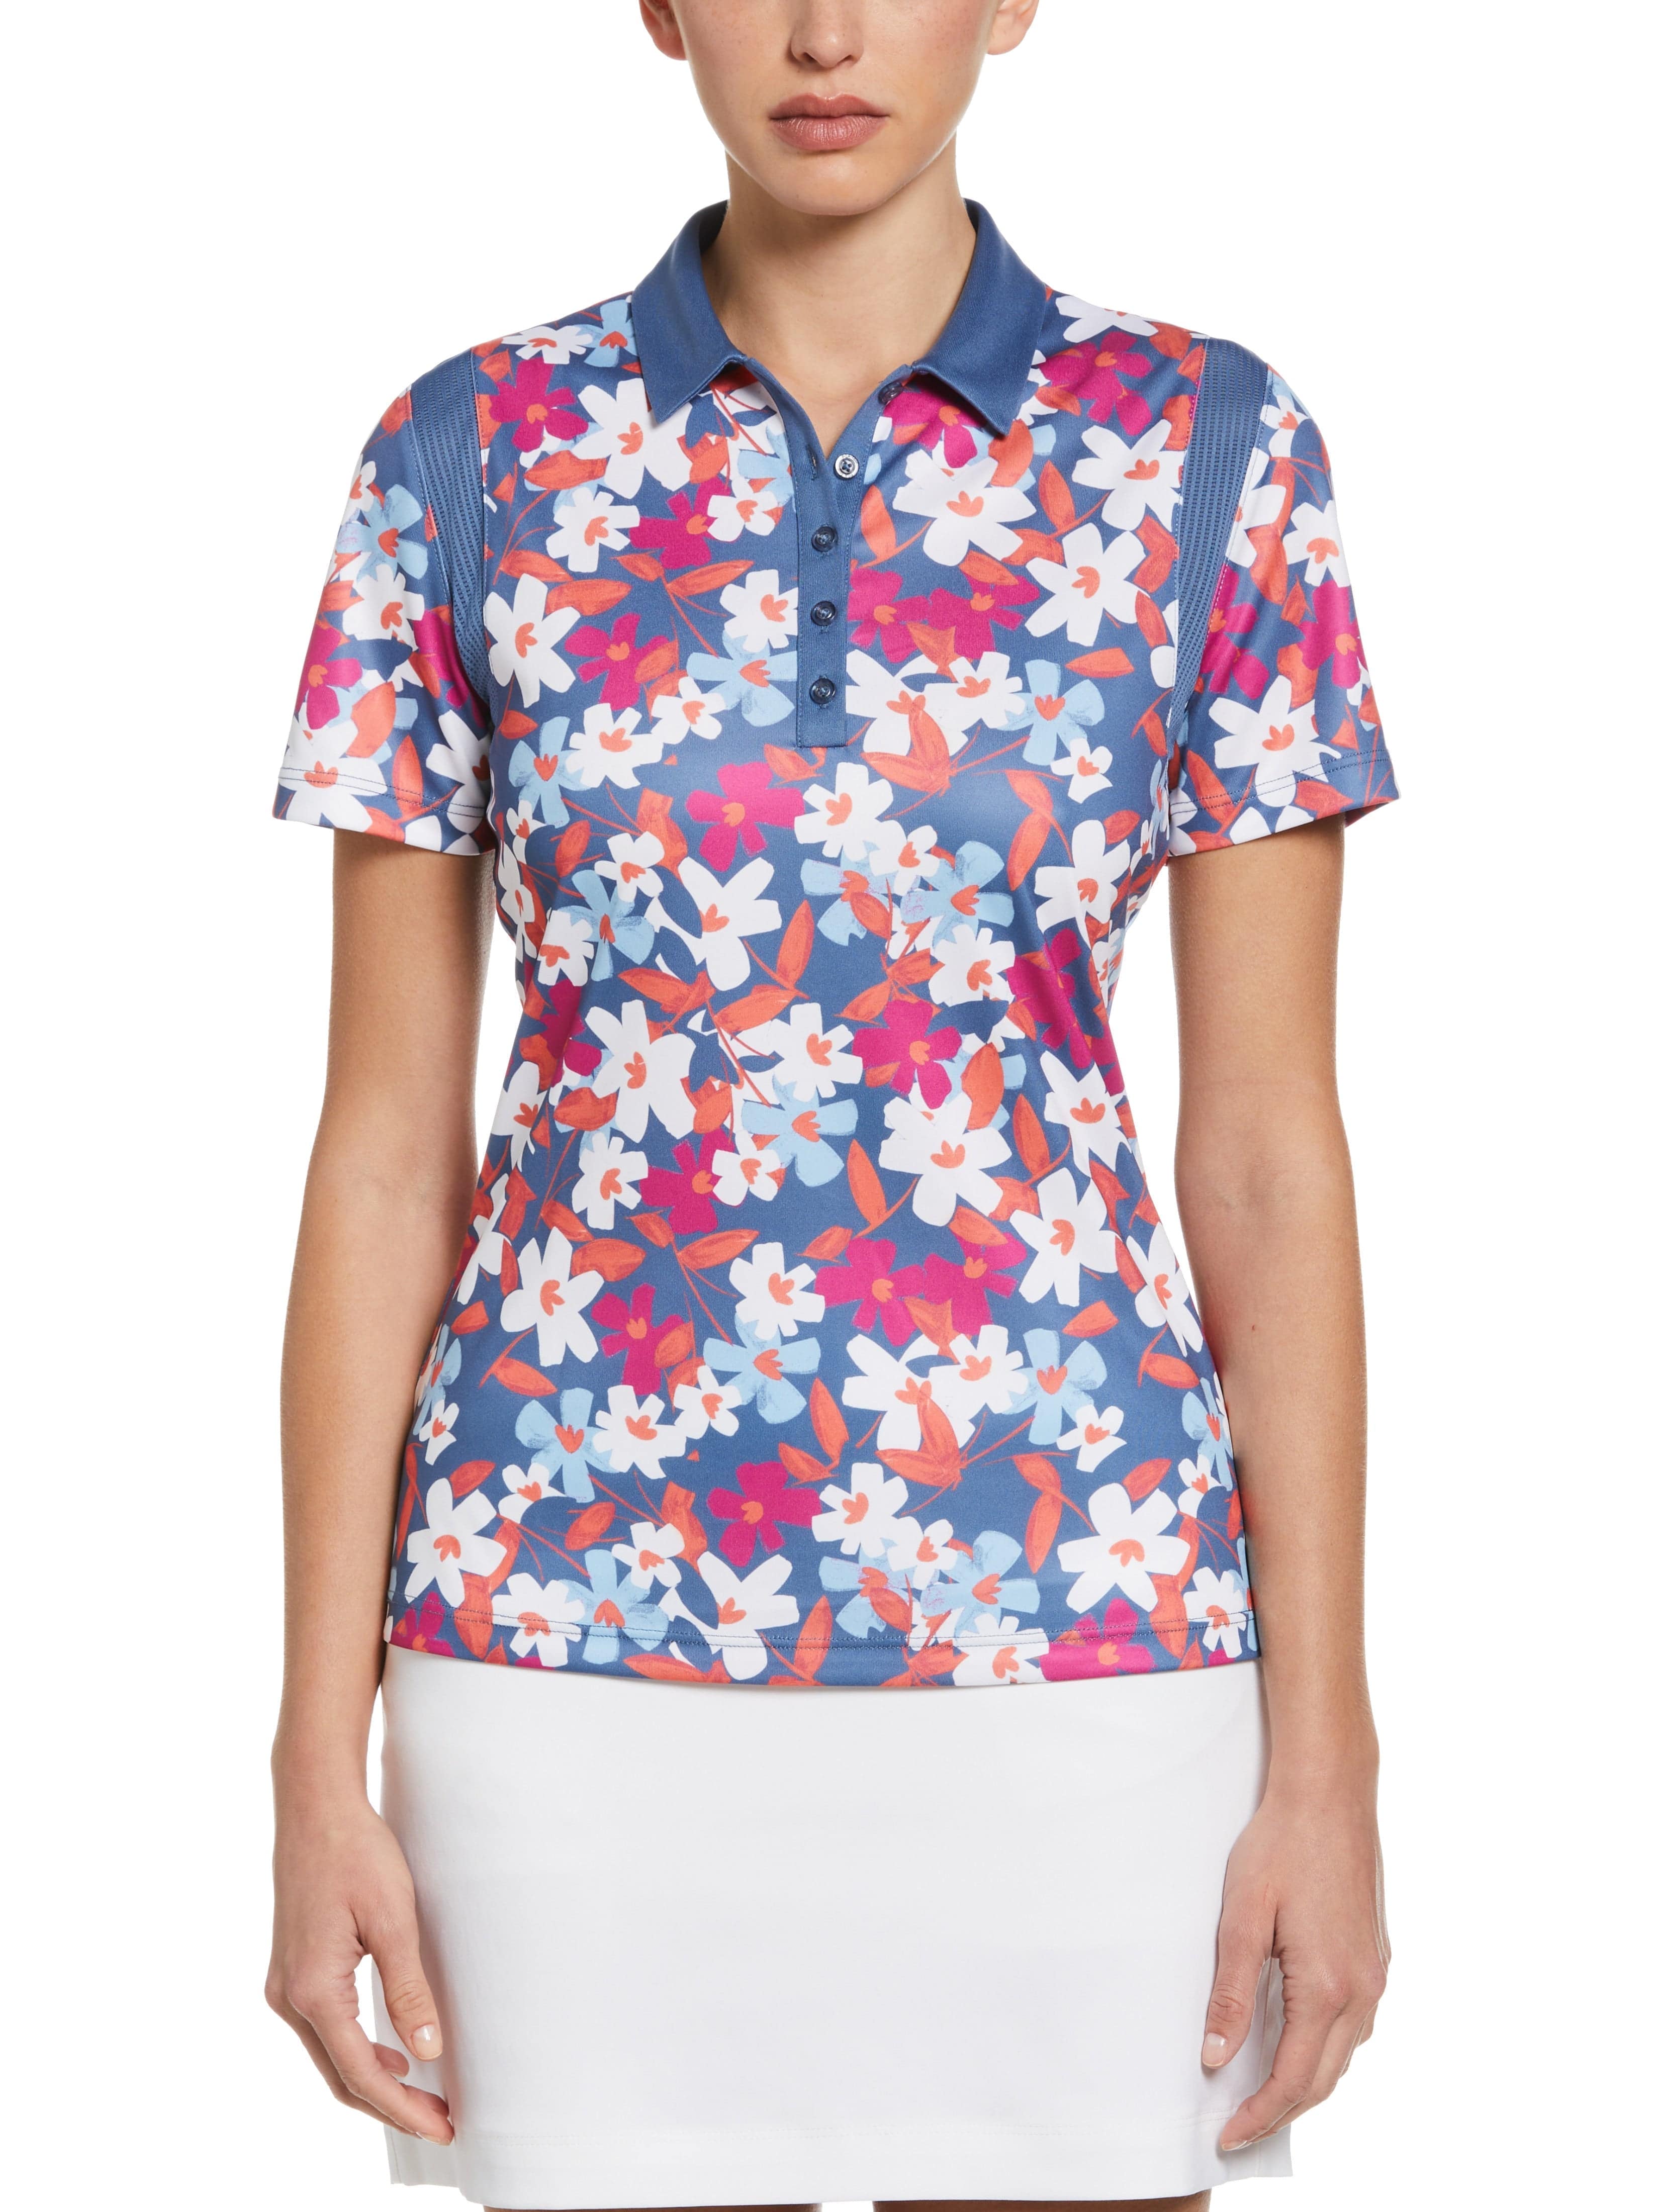 PGA TOUR Apparel Womens Floral Print Golf Polo Shirt w/ Snaps, Size Small, Blue Horizon, 100% Polyester | Golf Apparel Shop